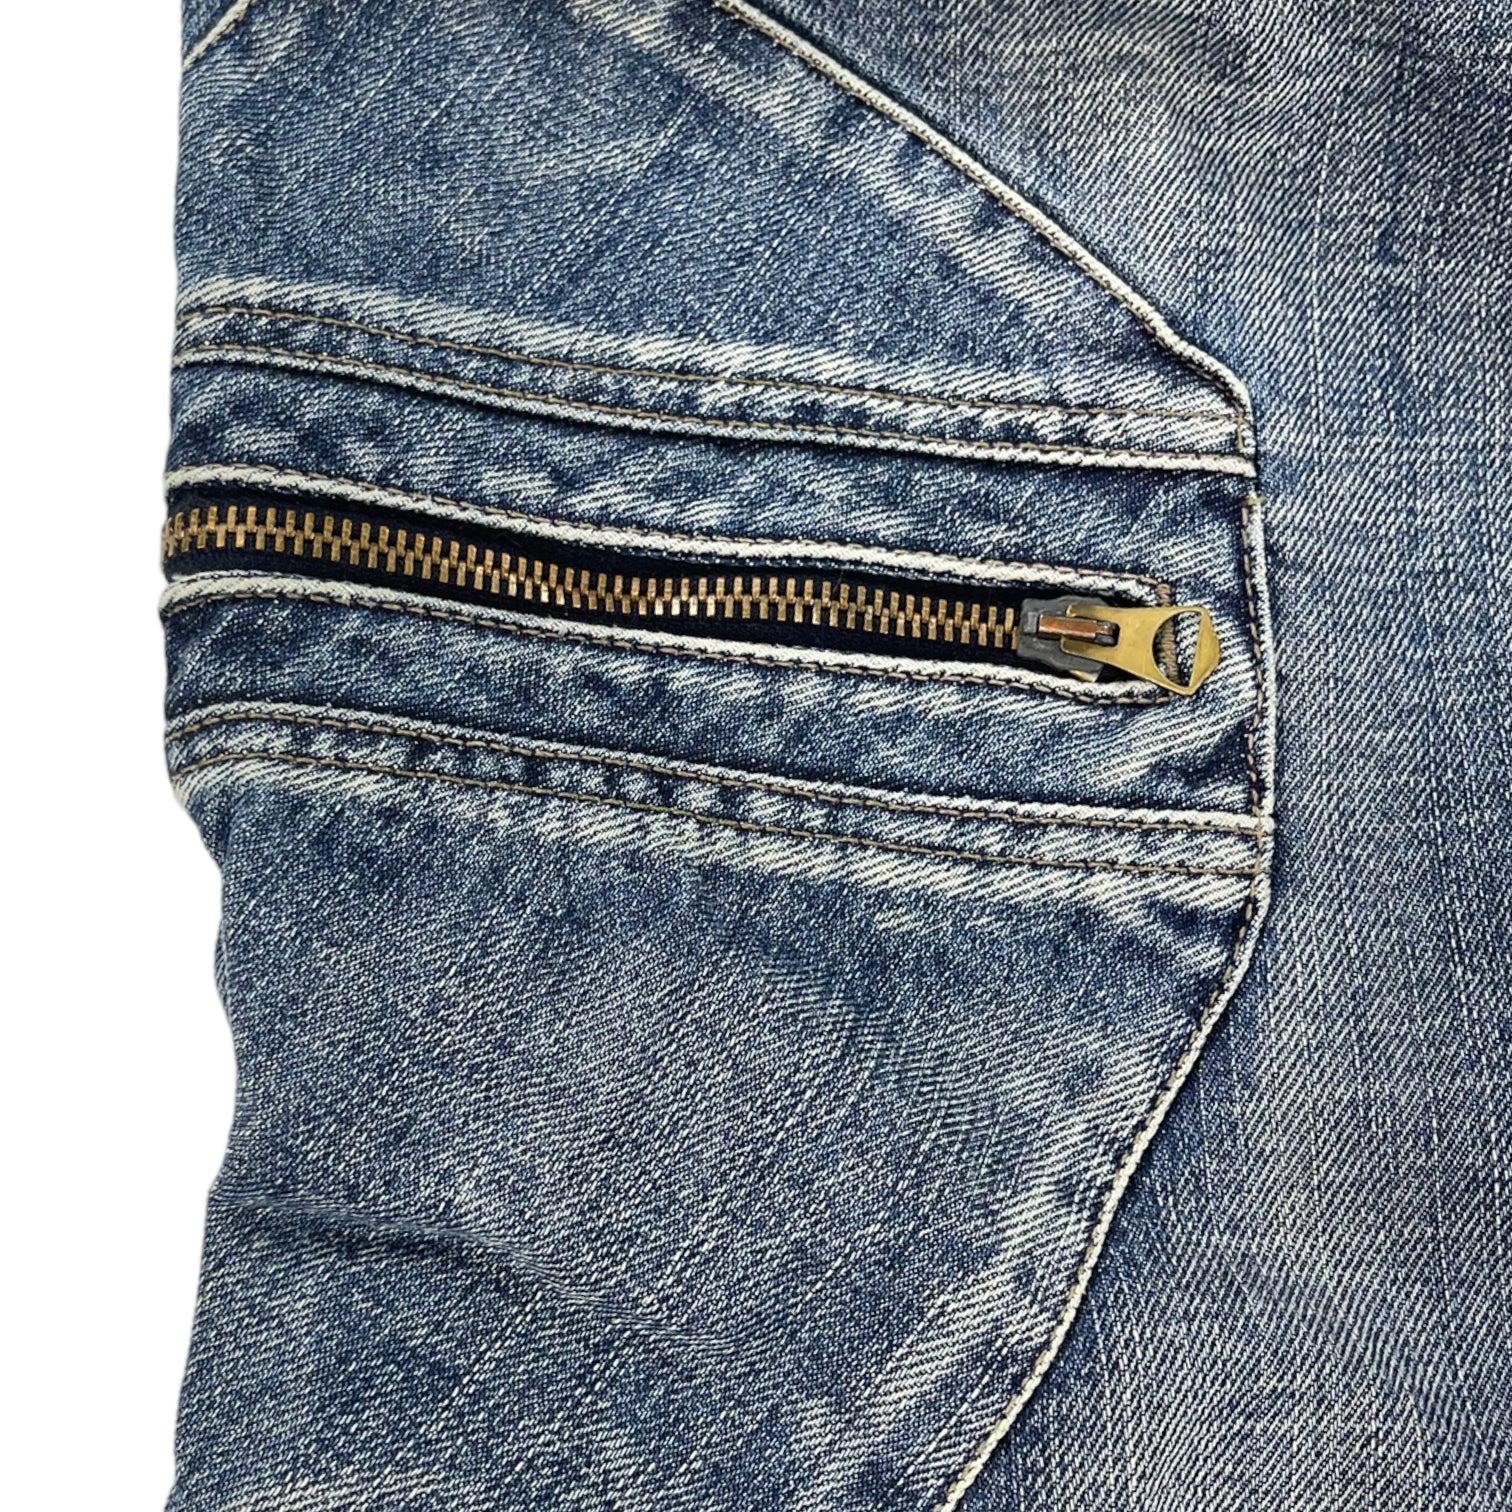 2000s Armani Jeans cargo jeans